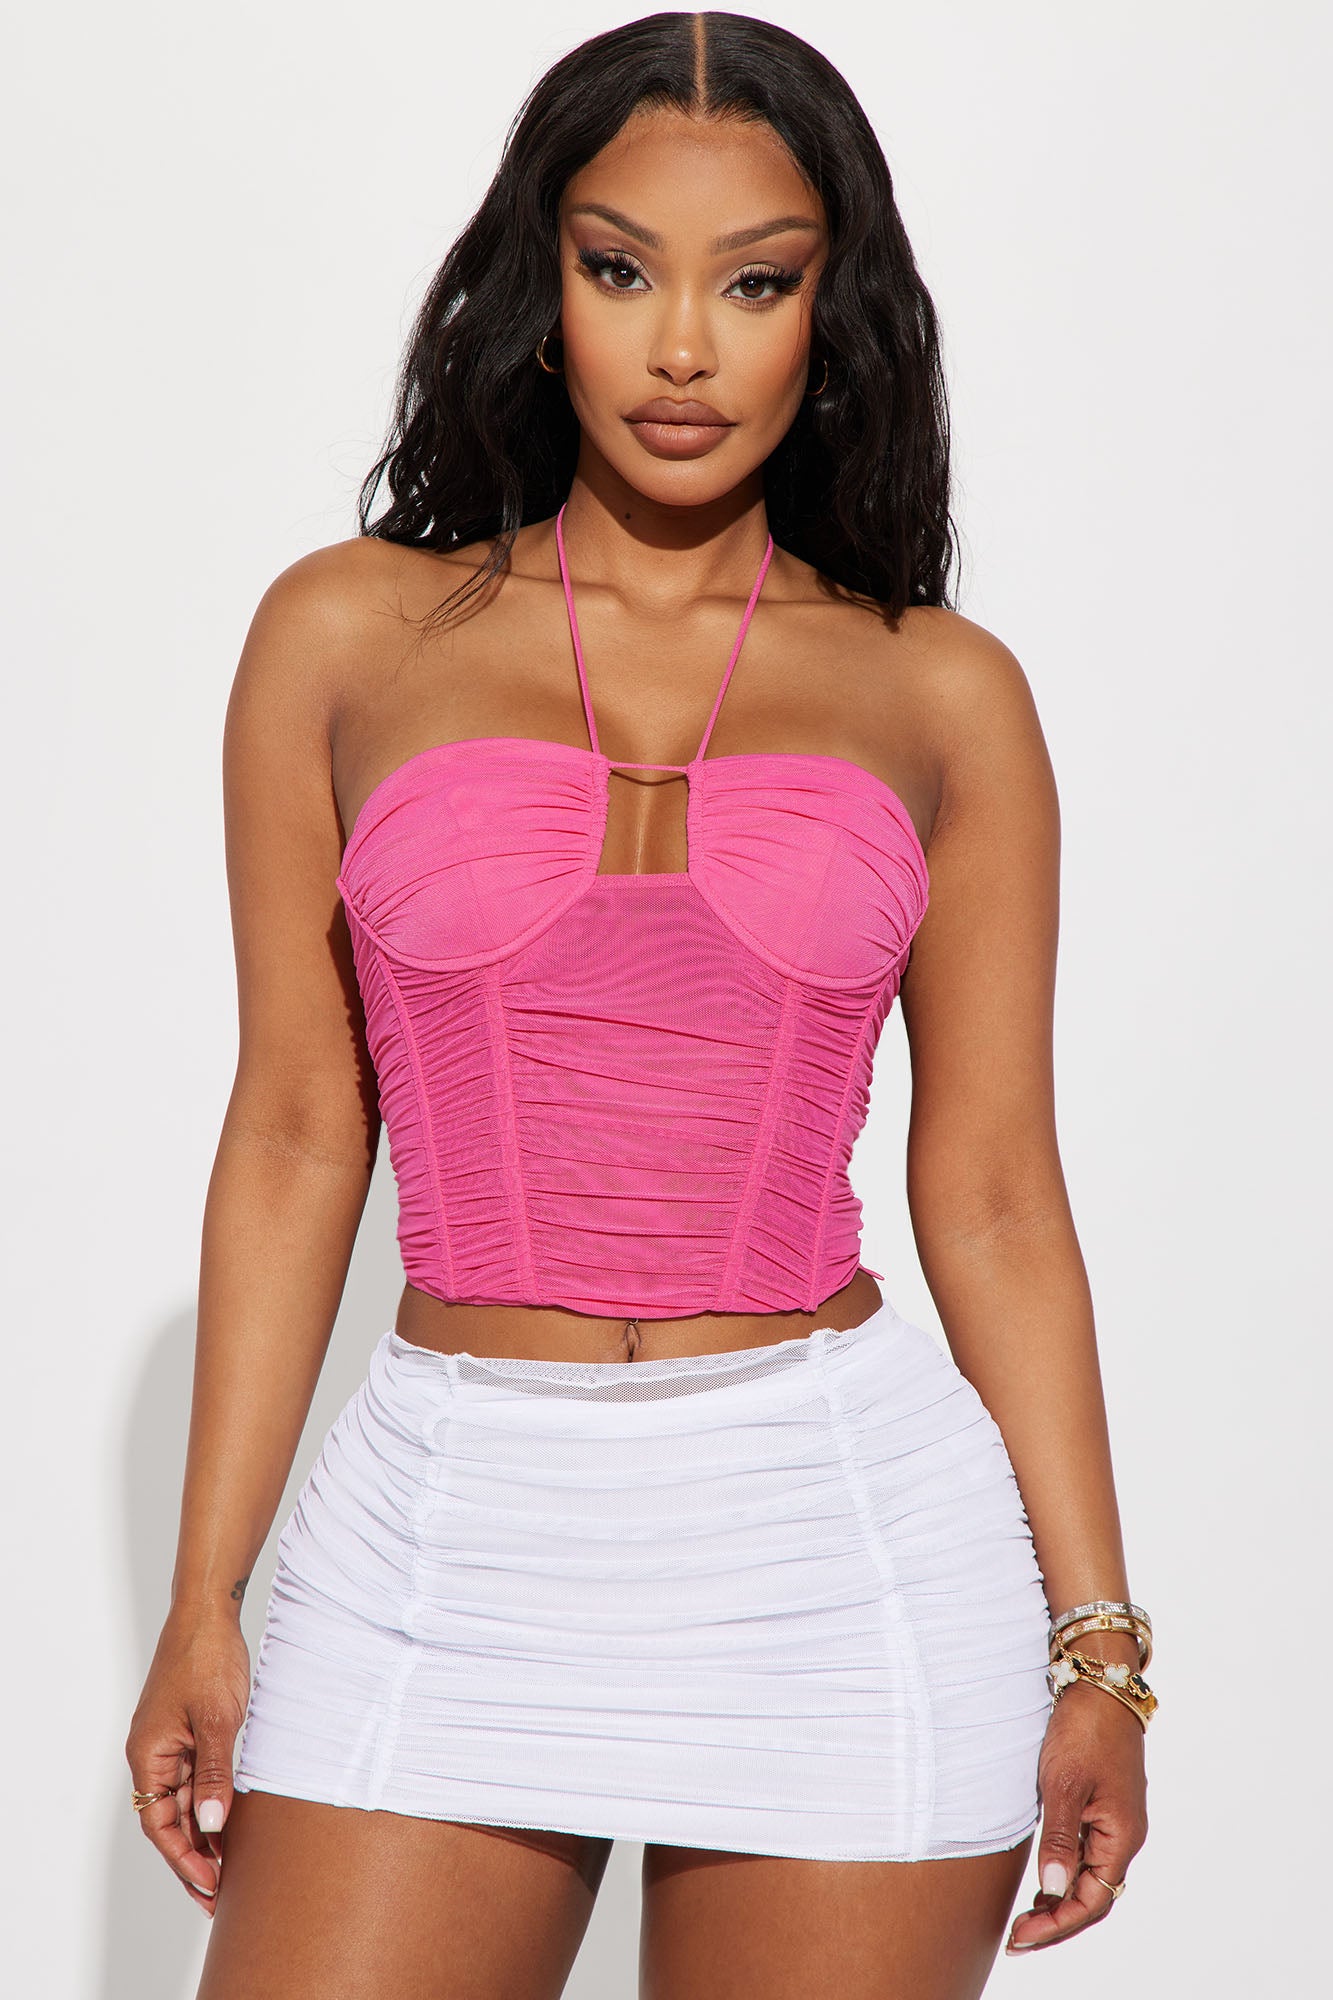 Belle Corset Top - Hot Pink, Fashion Nova, Knit Tops